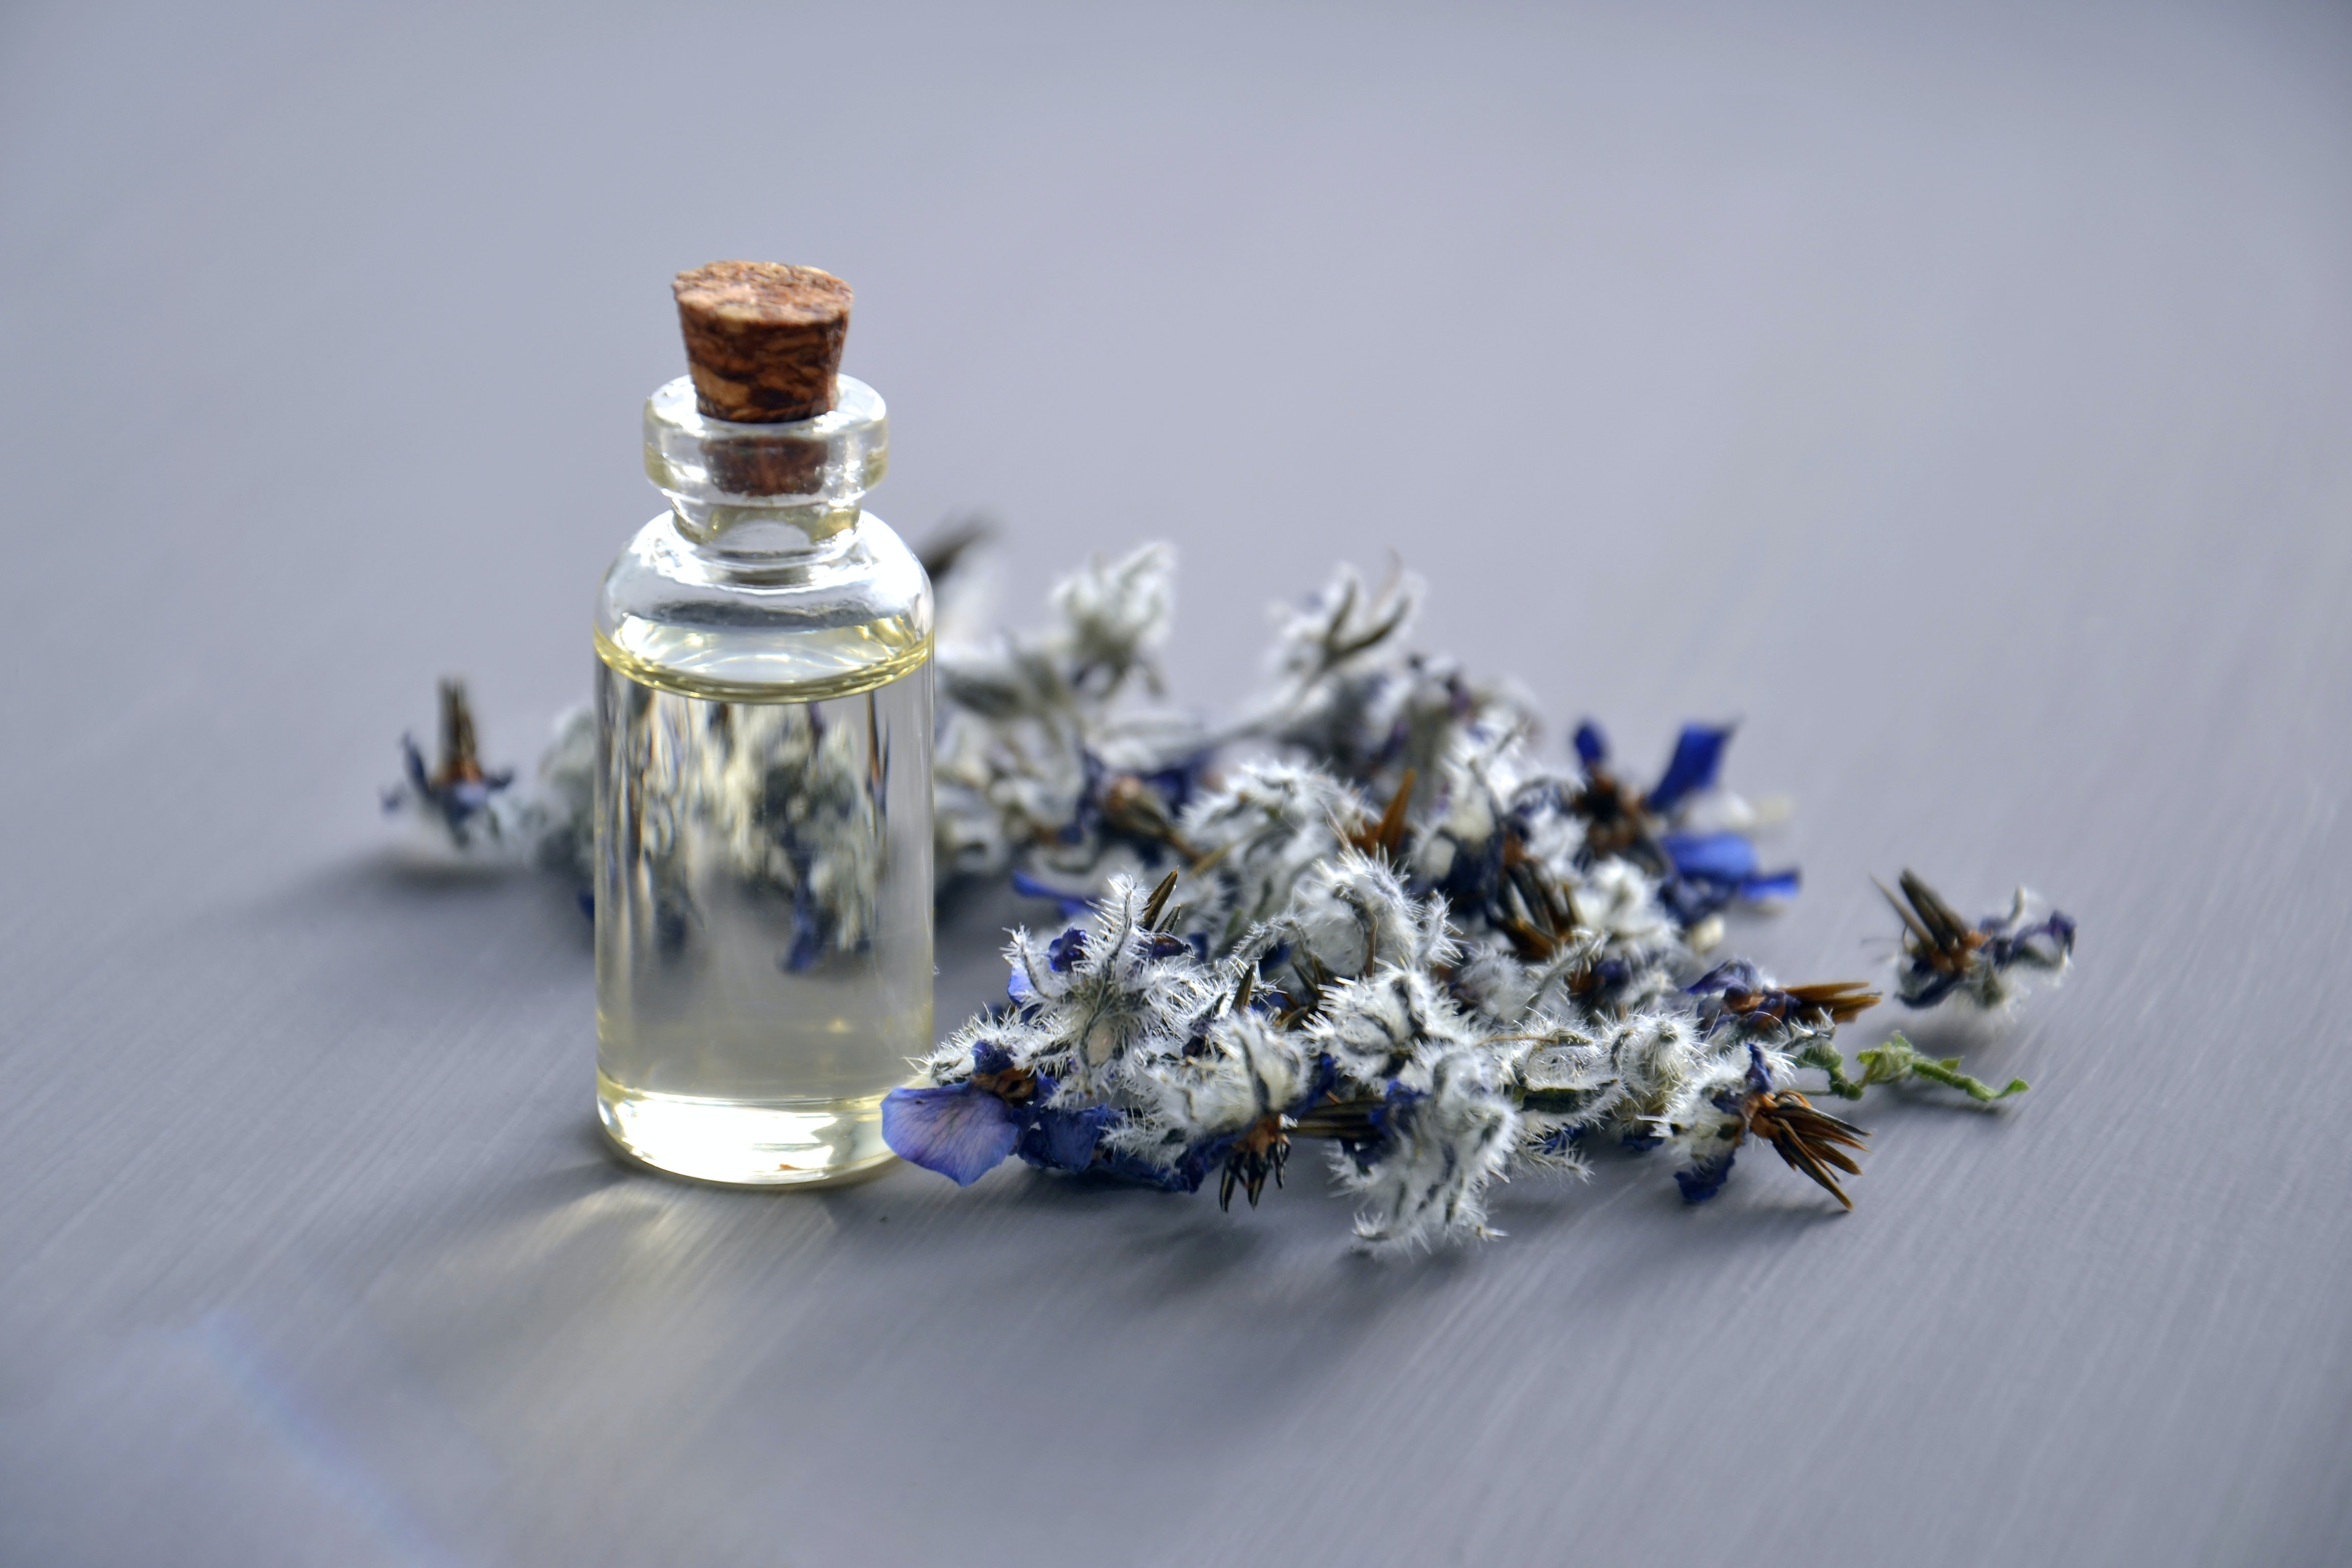 Fragrance Hacks to Make Your Scent Last Longer